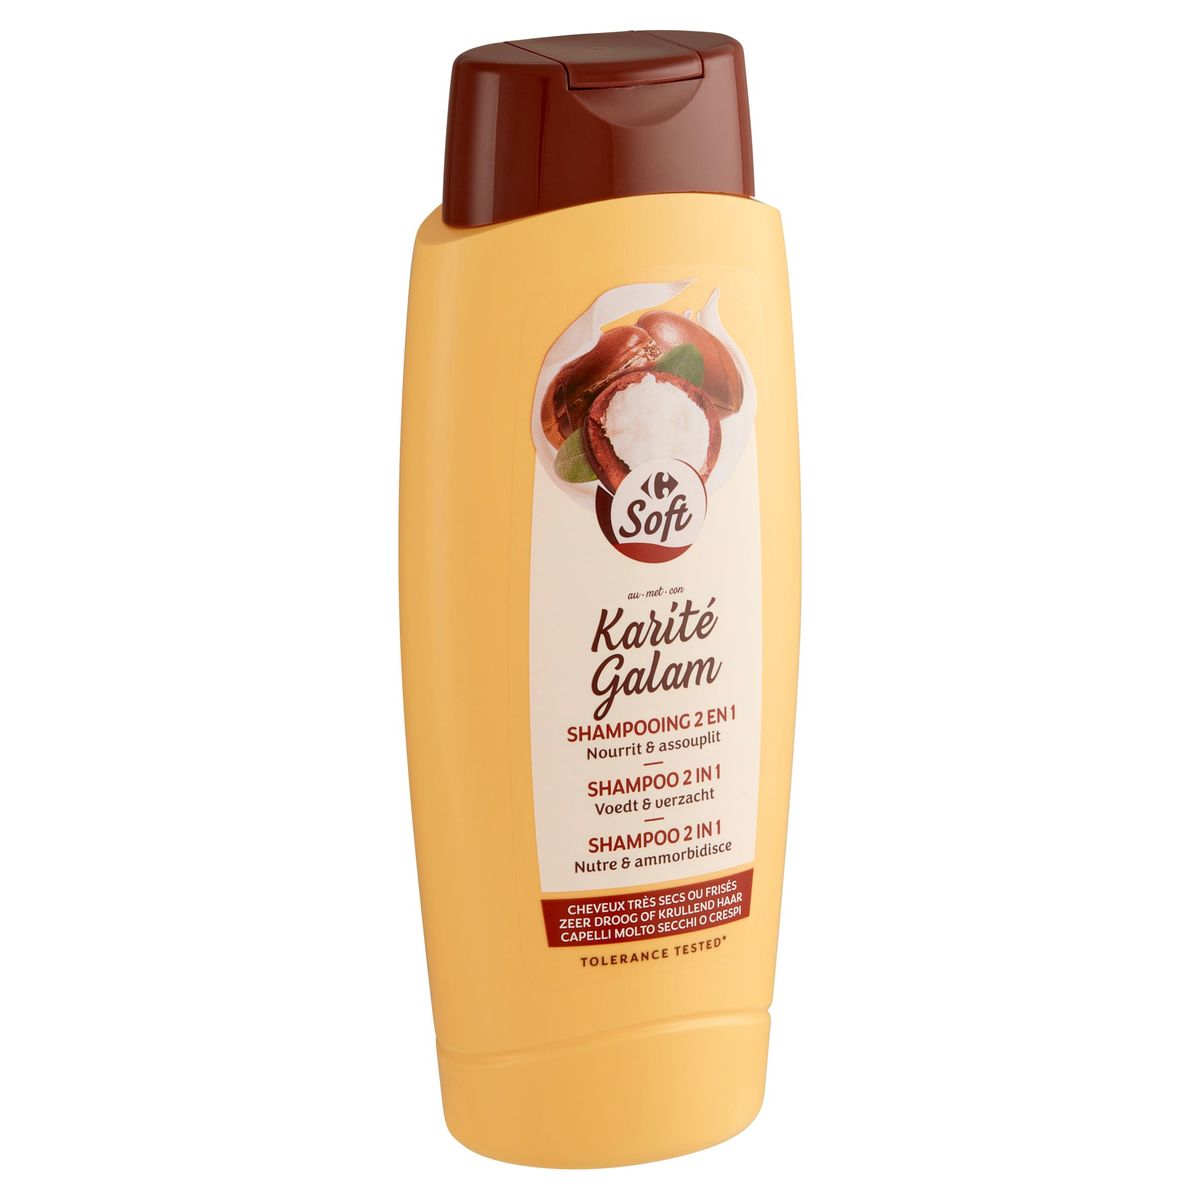 Carrefour Soft met Karité Galam Shampoo 2 in 1 500 ml